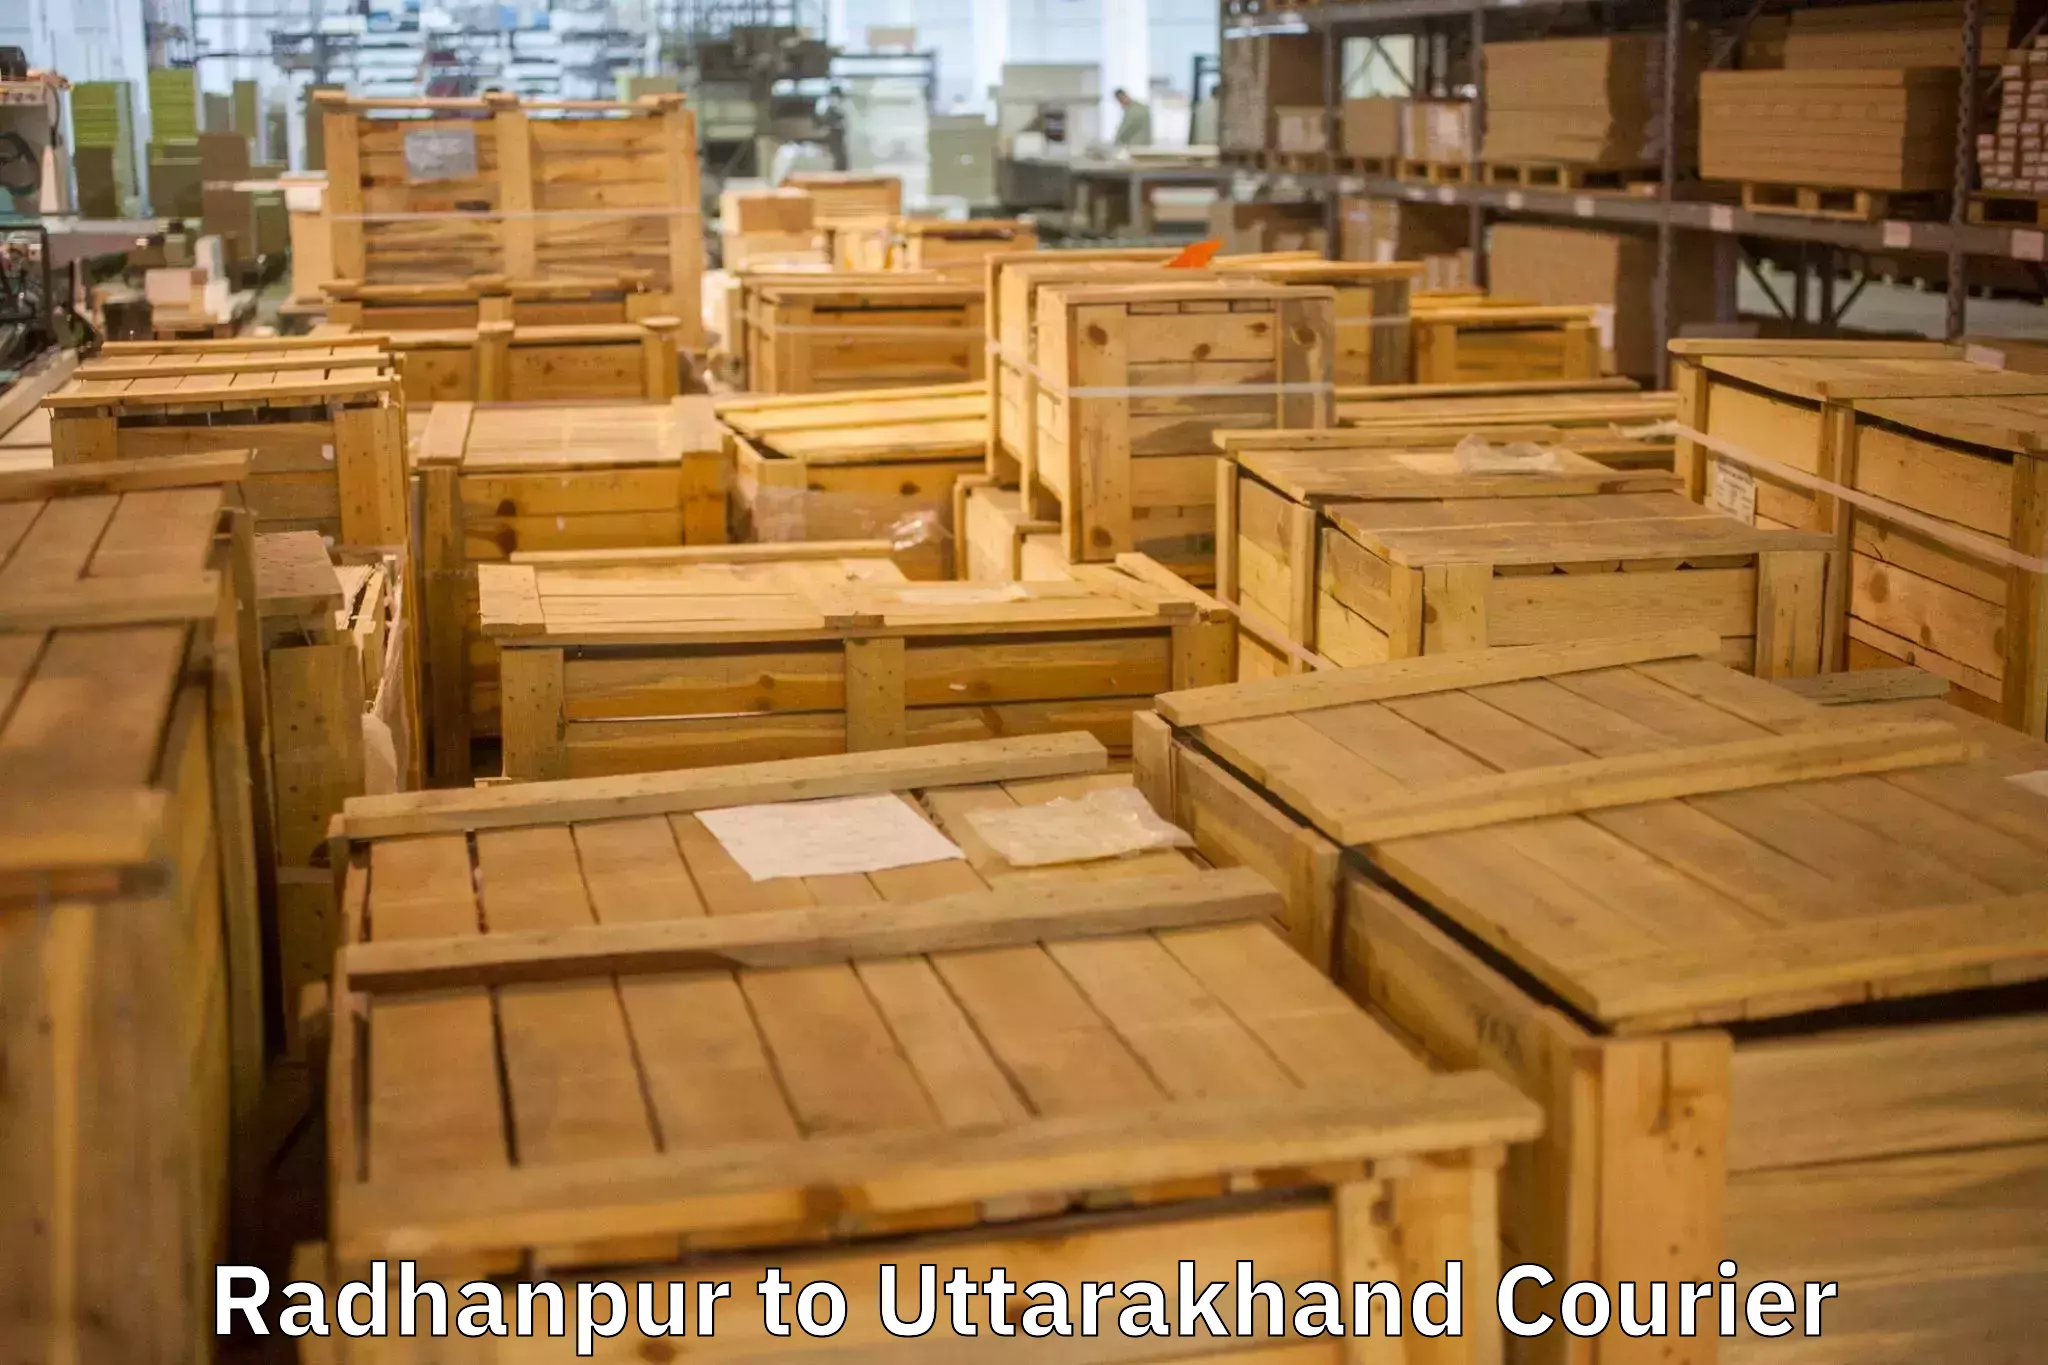 Expert goods movers in Radhanpur to Uttarakhand